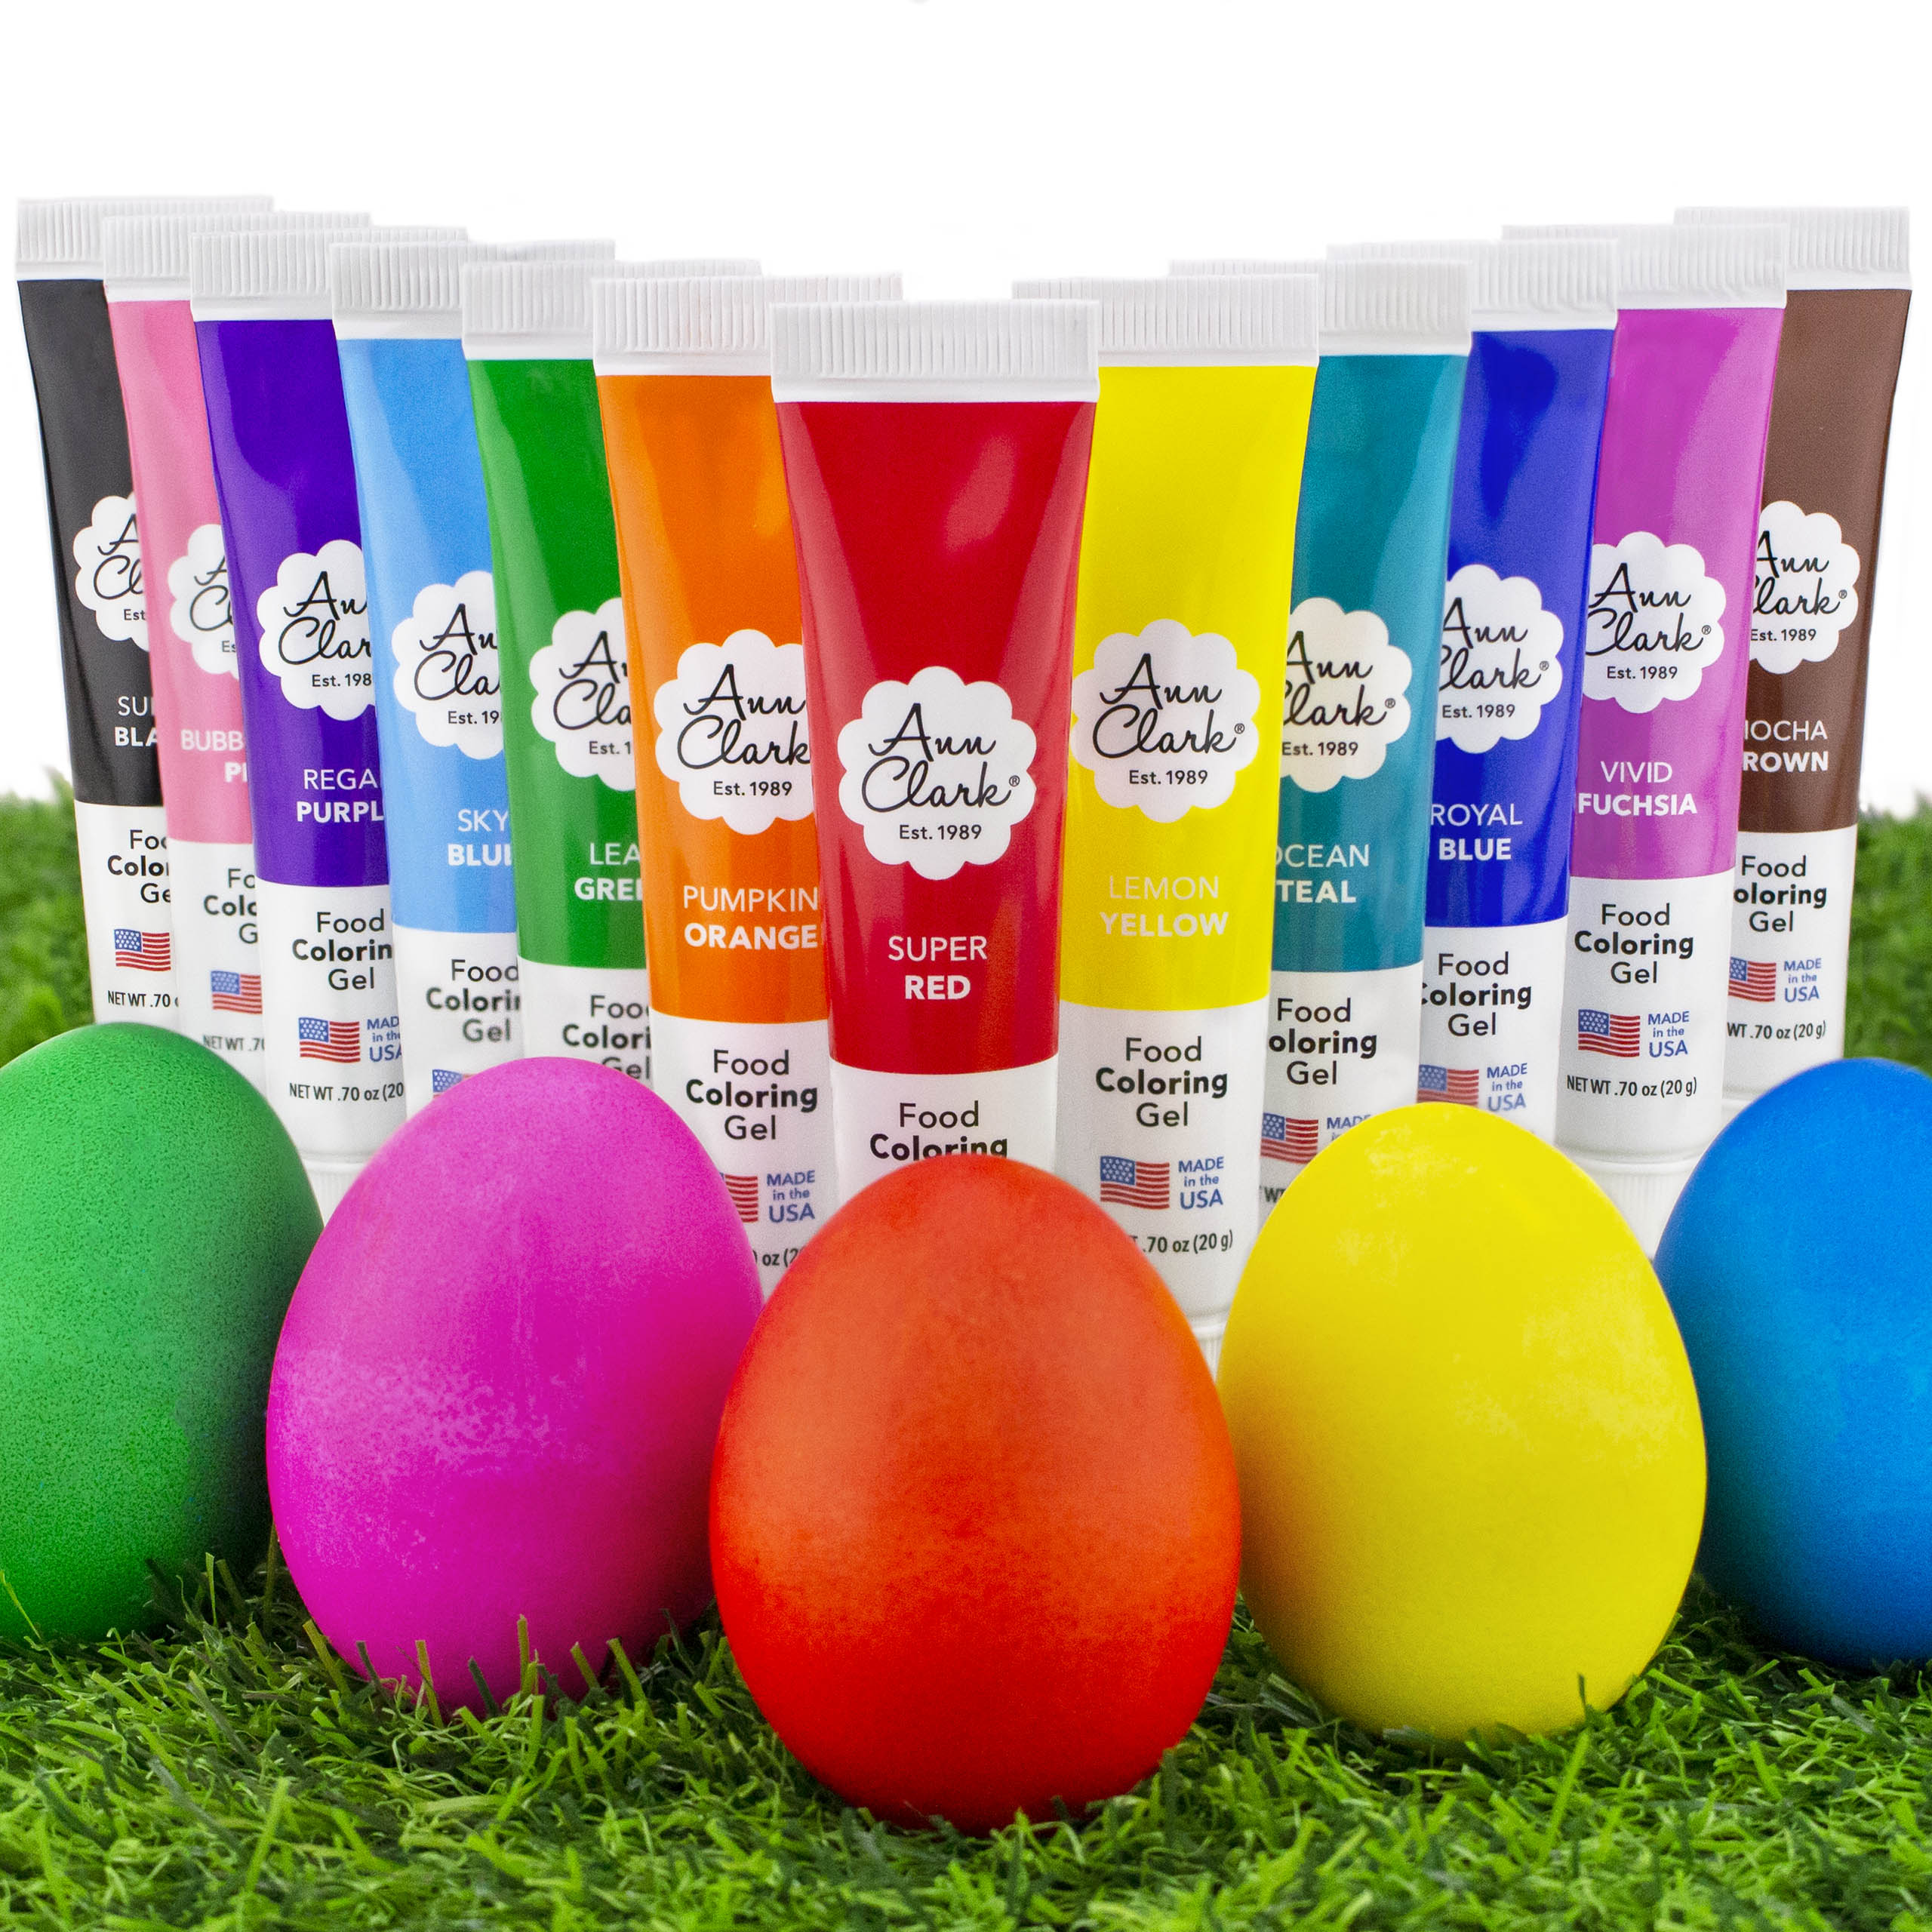 Ann Clark gel food coloring behind colorful dyed eggs